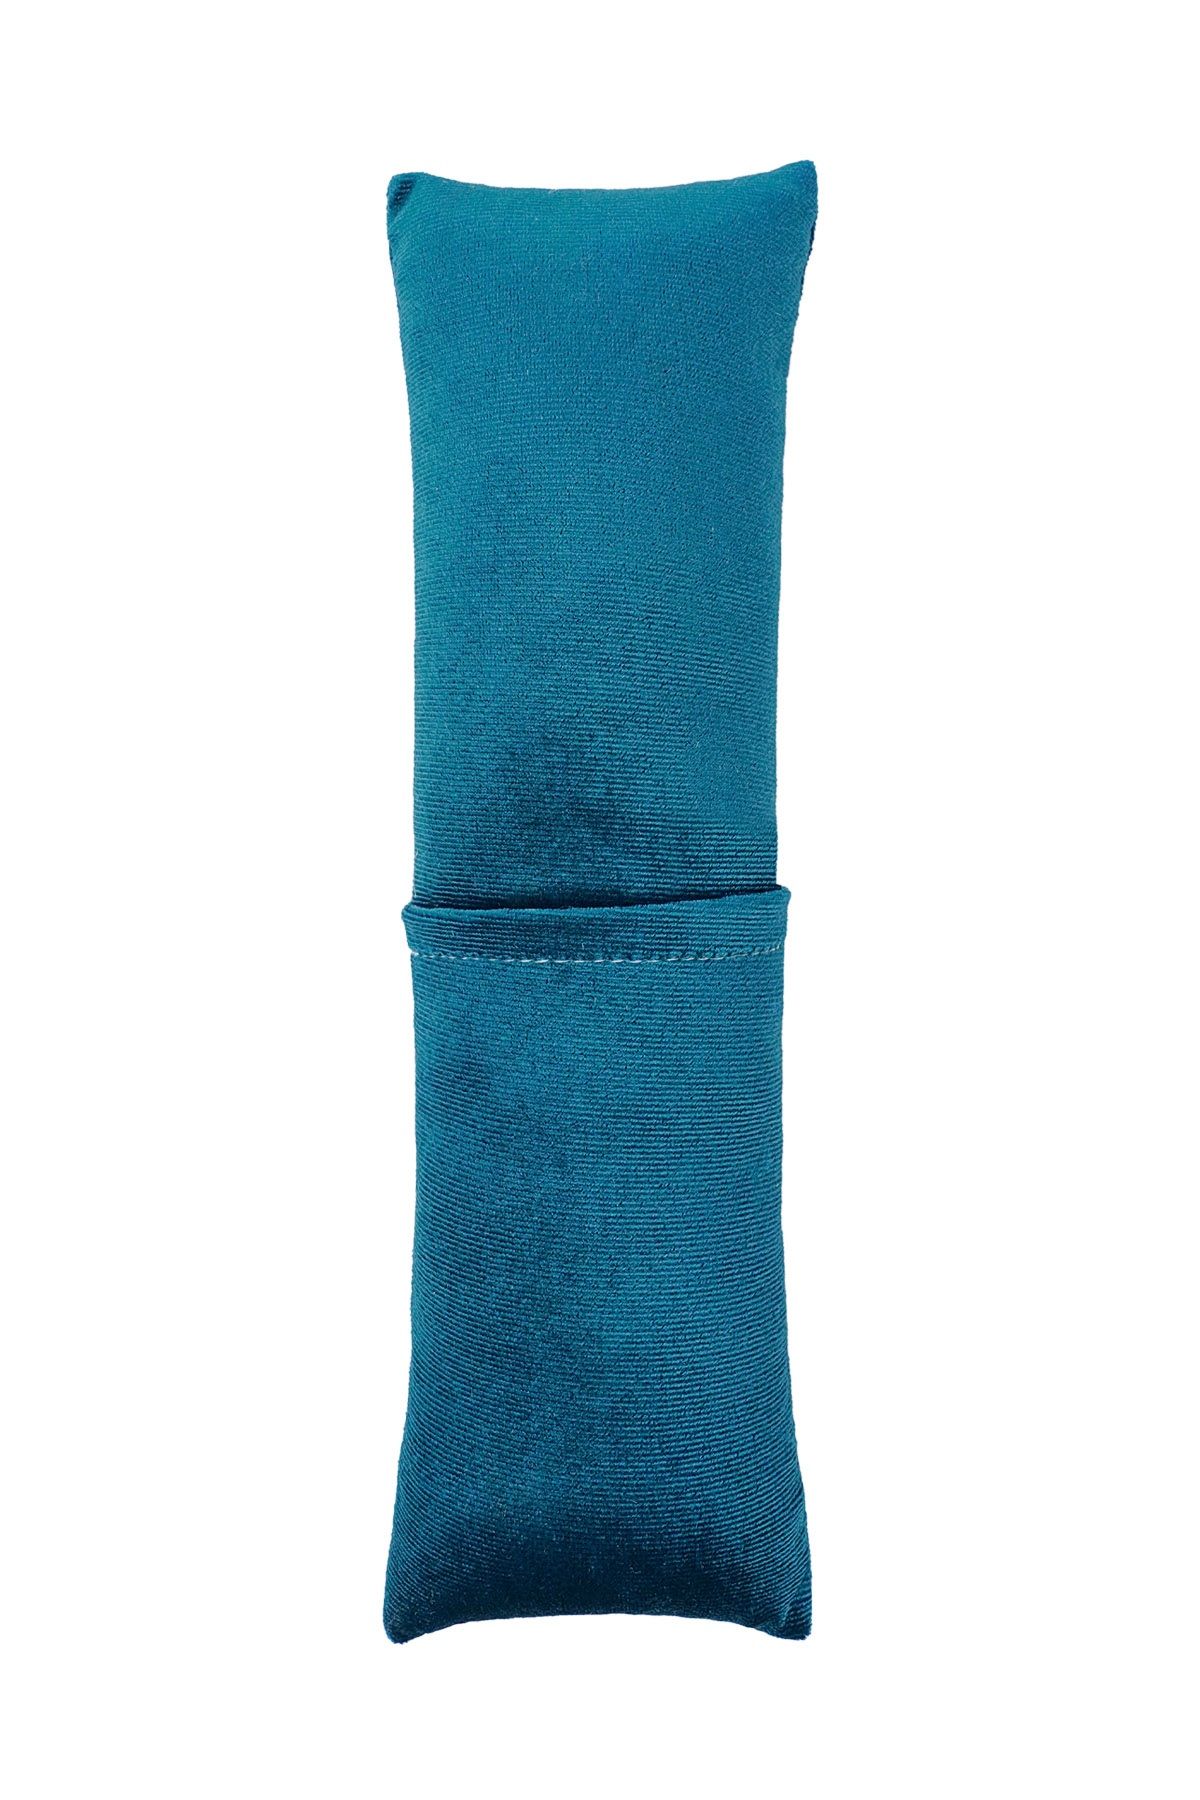 Basic armbanden kussen display lang - blauw  Afbeelding2